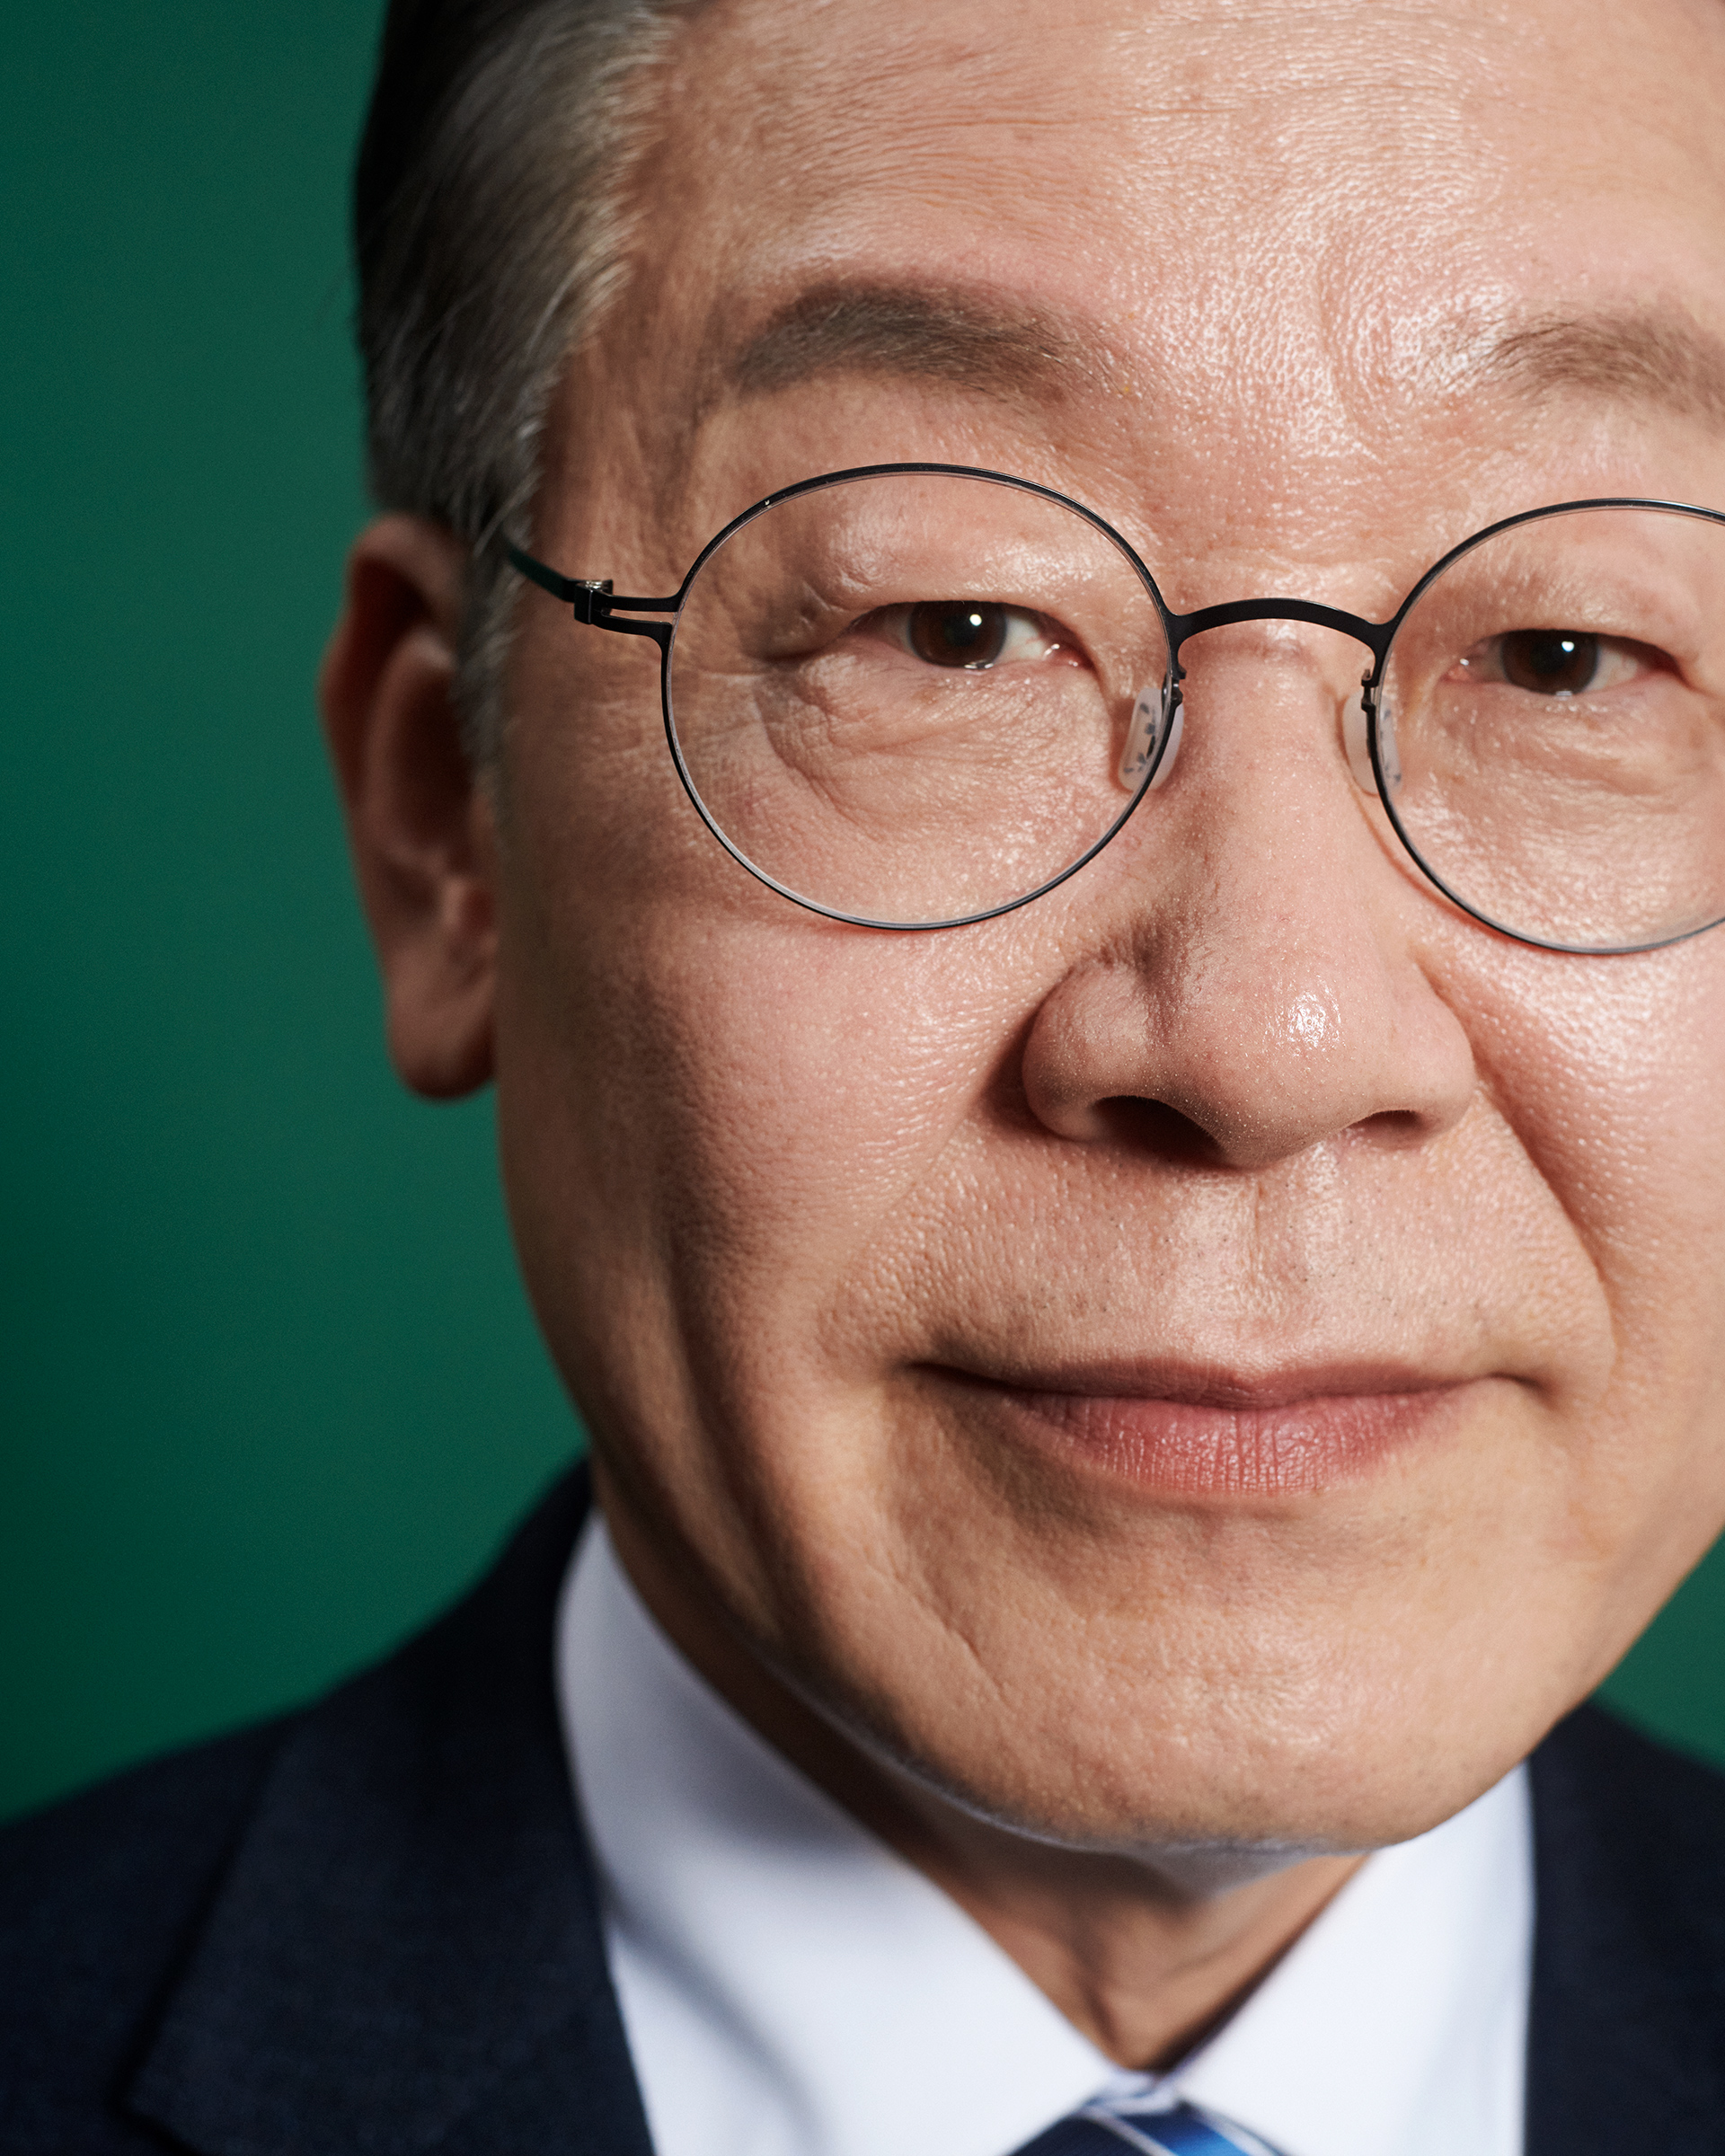 lee-jae-myung-south-korea-presidential-candidate-1